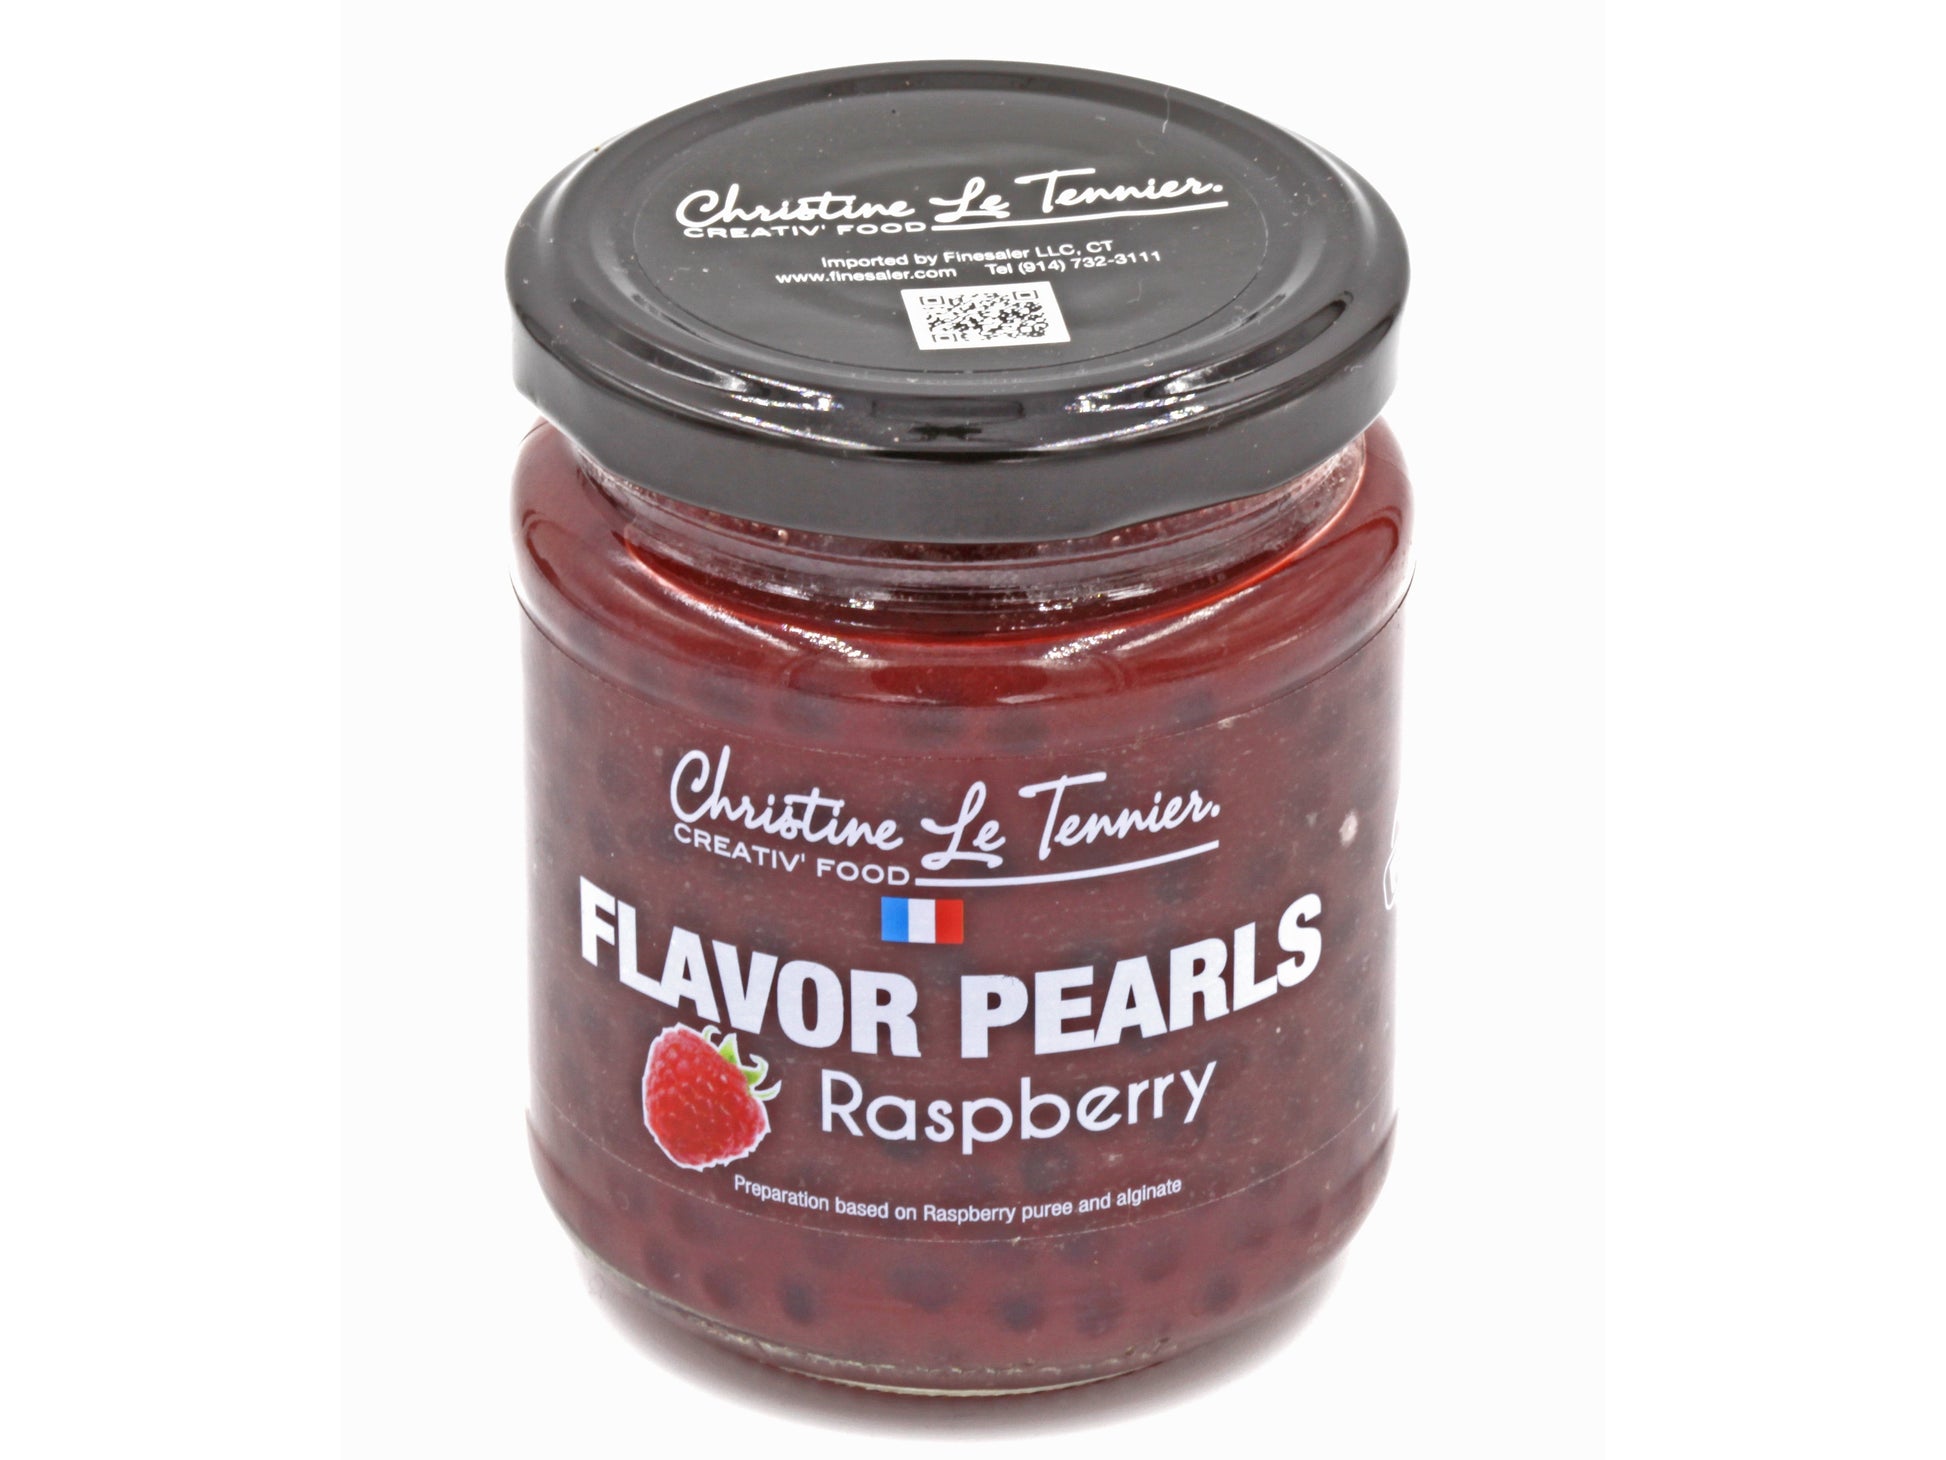 christine le tennier flavored pearls, 7oz jar, france raspberry